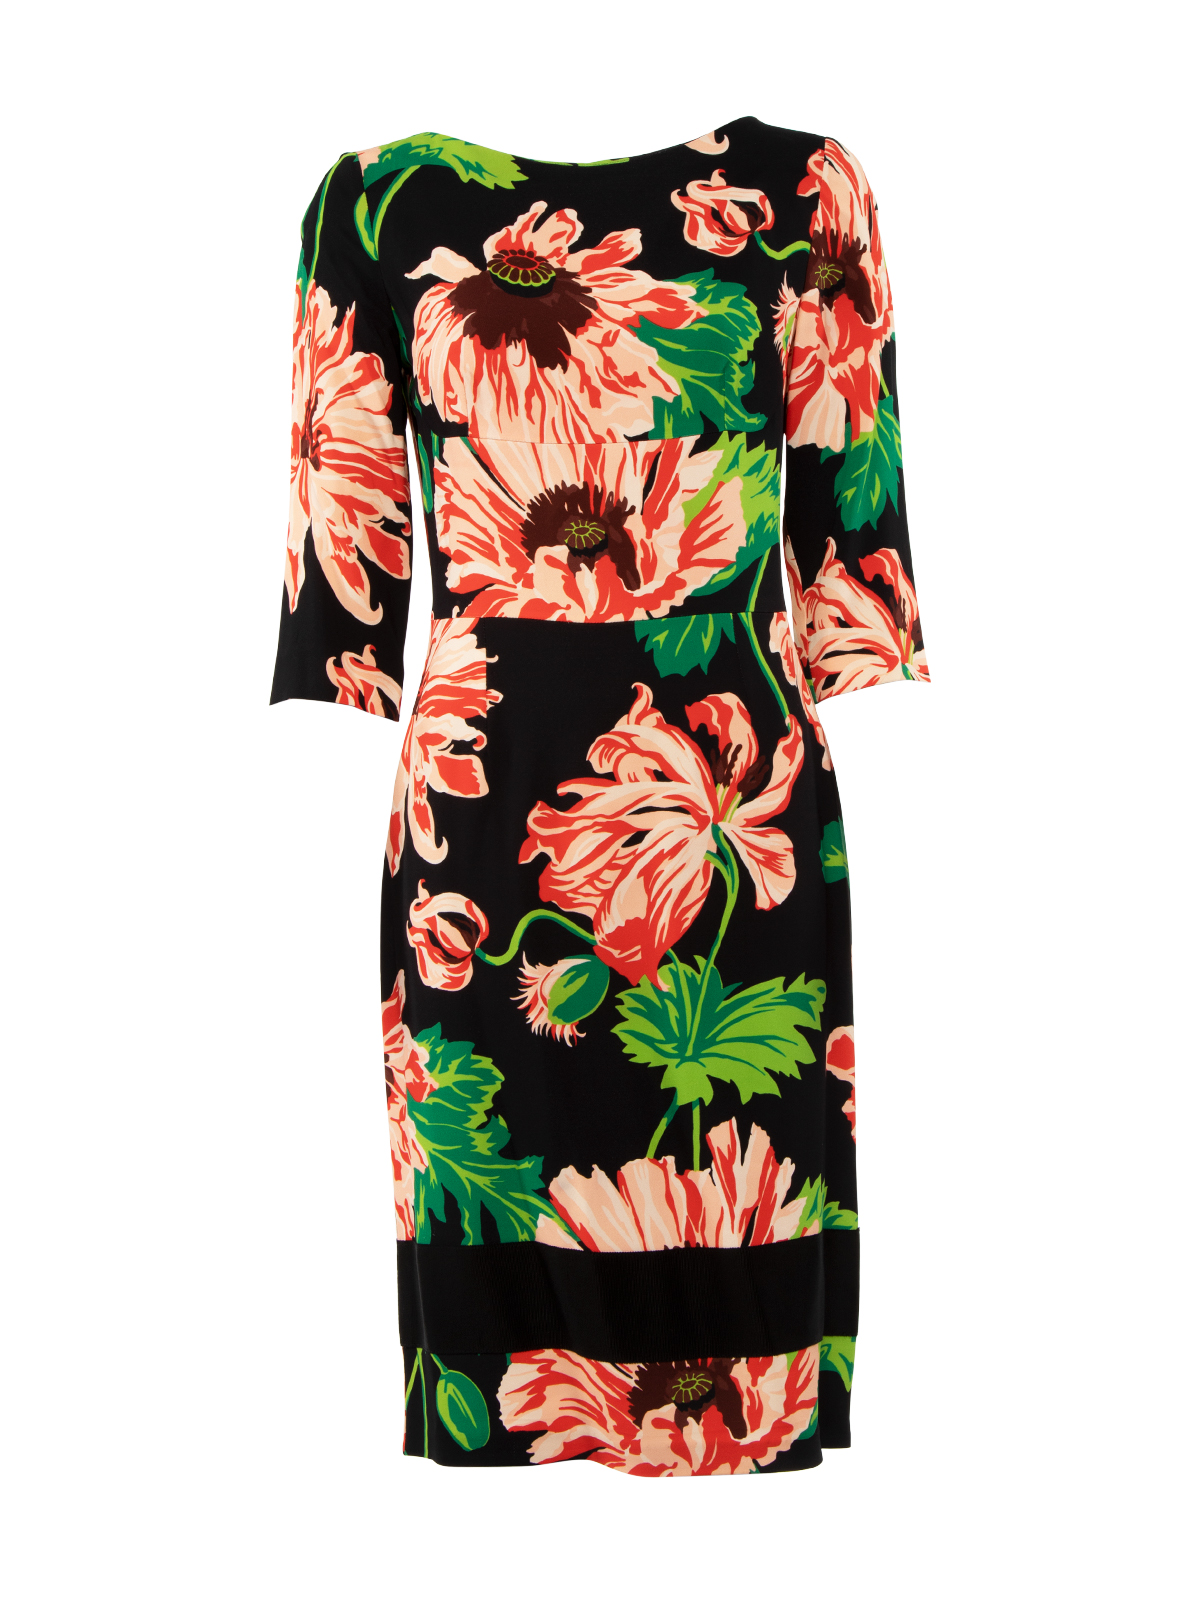 Stella McCartney Floral Print Dress